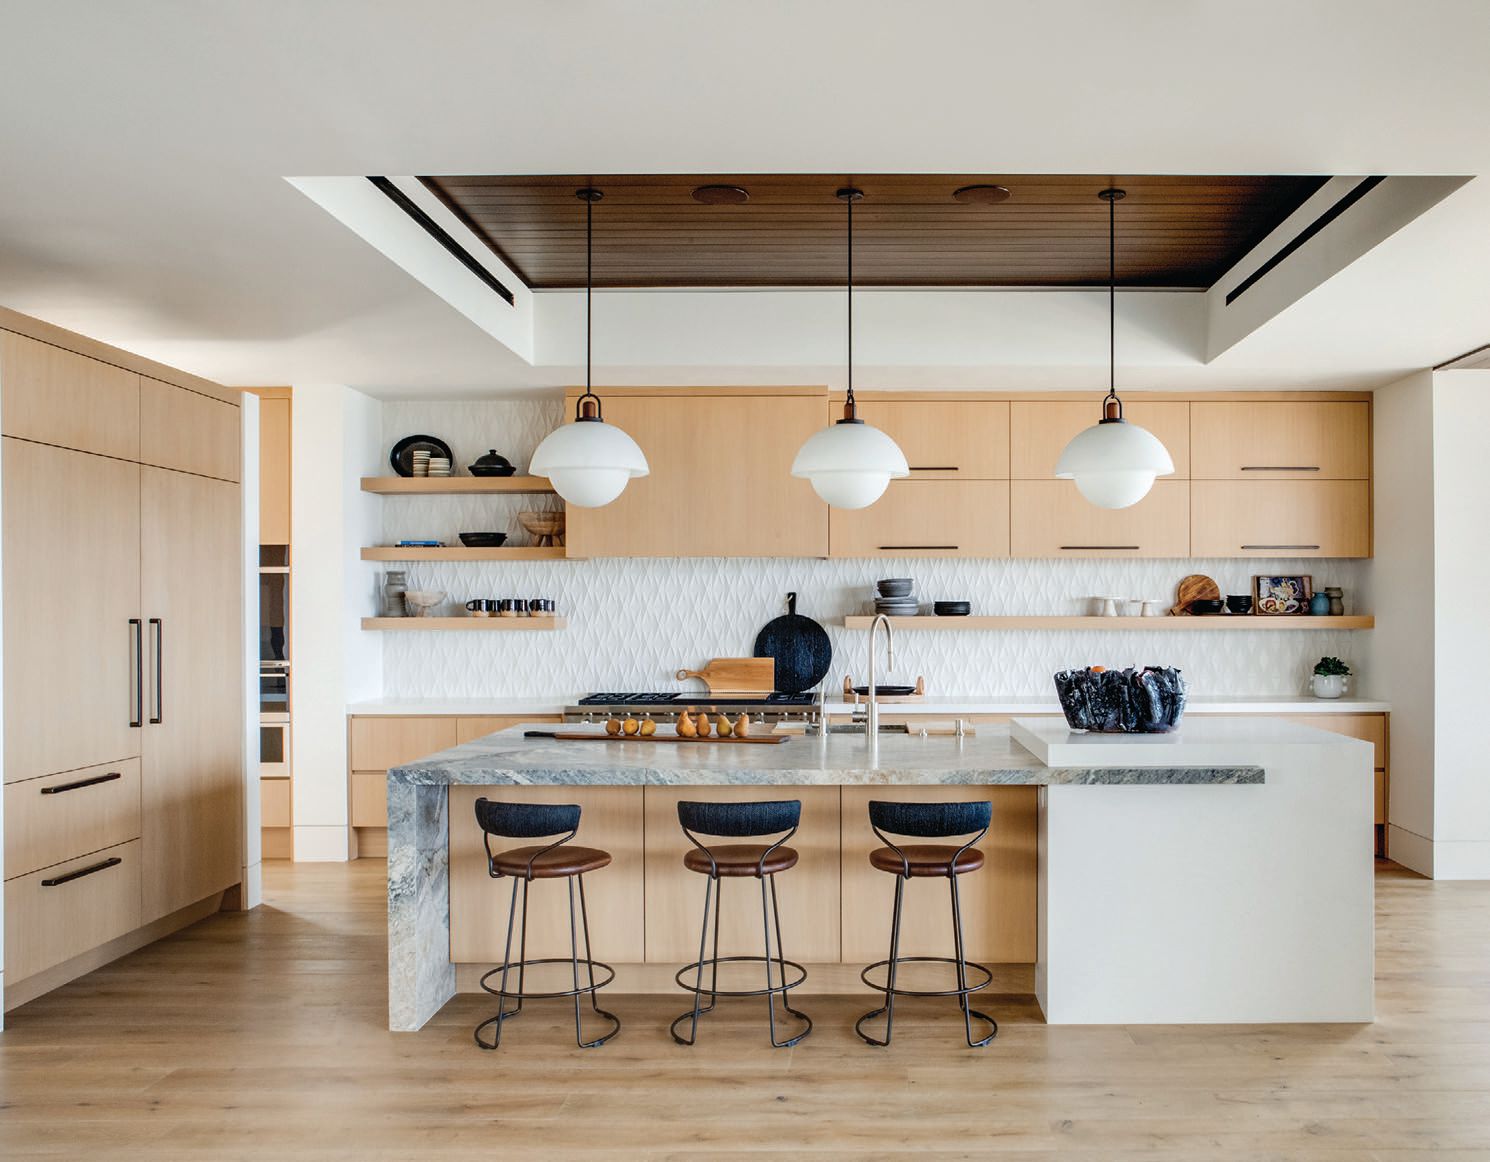 Designed by O.C.’s Morrison Design, this sleek kitchen’s backsplash features MADE by Ann Sacks’ Modern Criss Cross tiling in White Shimmer Matte PHOTO: BY MELLON STUDIO